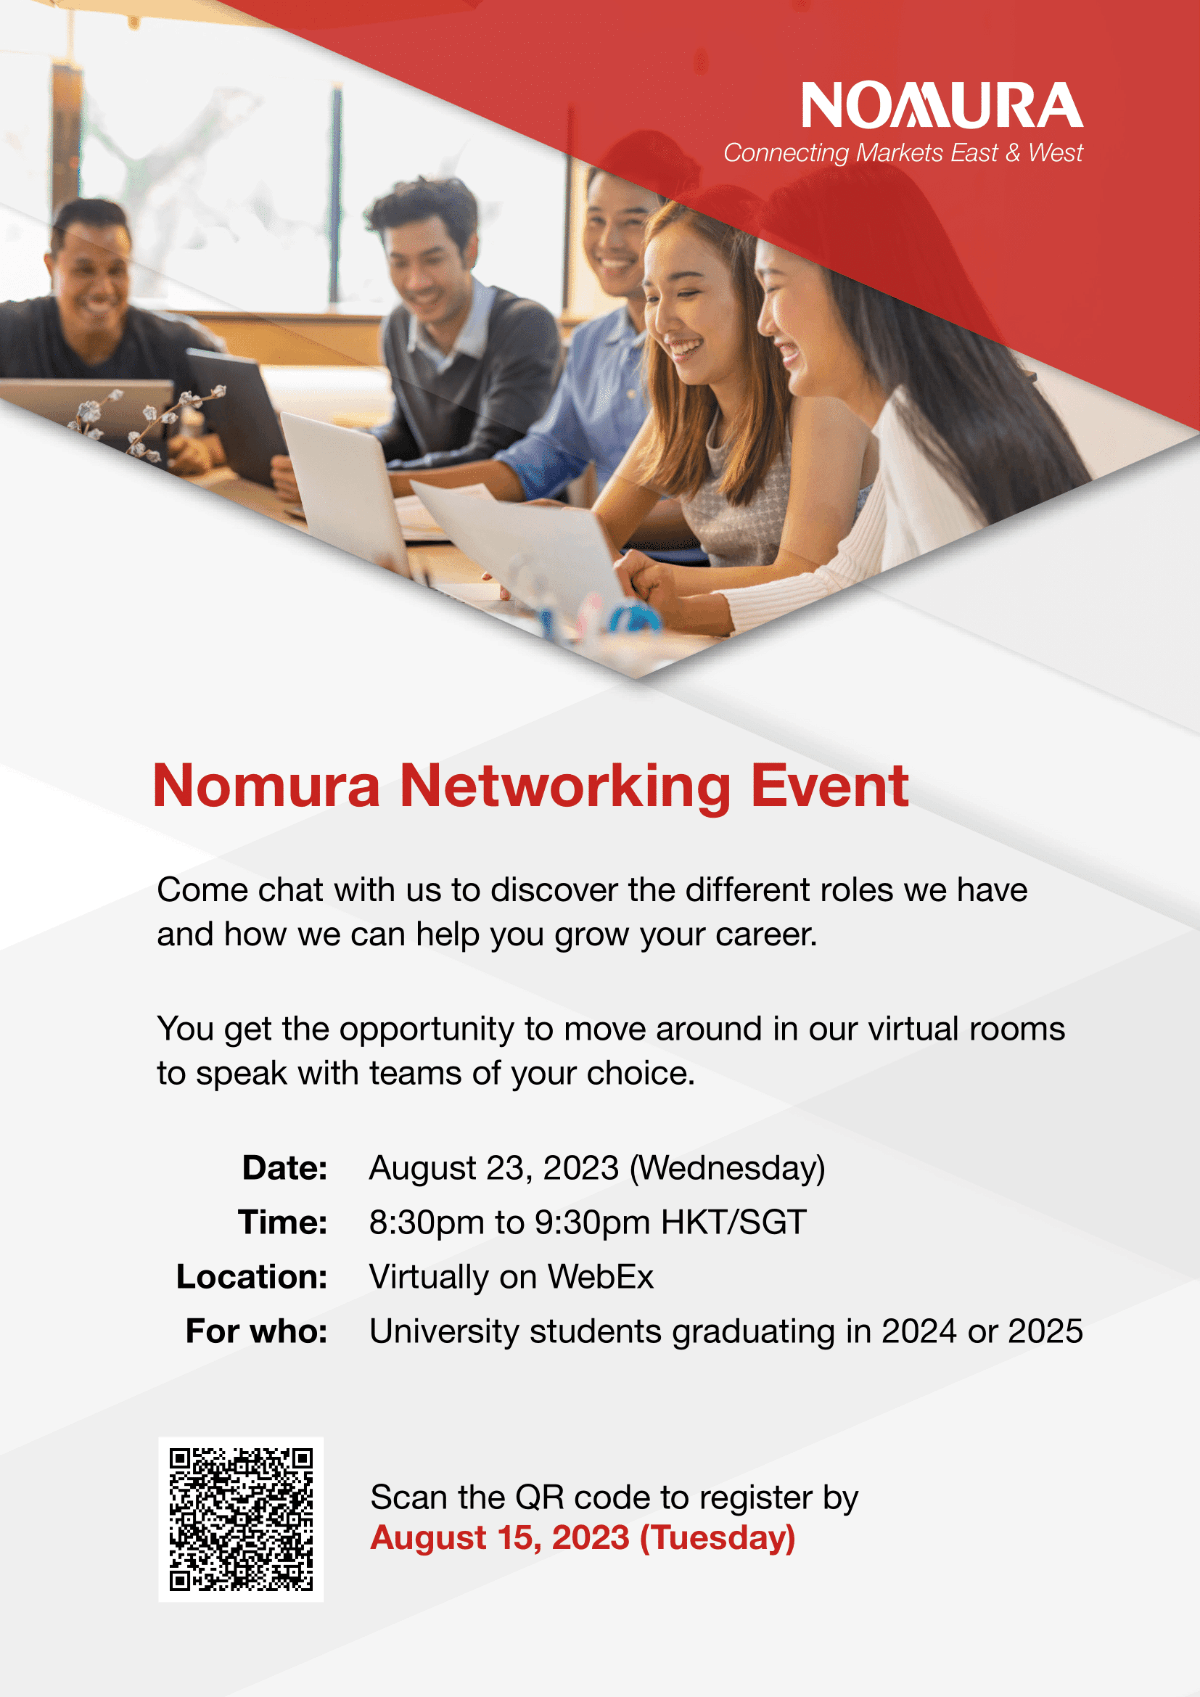 Nomura Networking Event EDM image